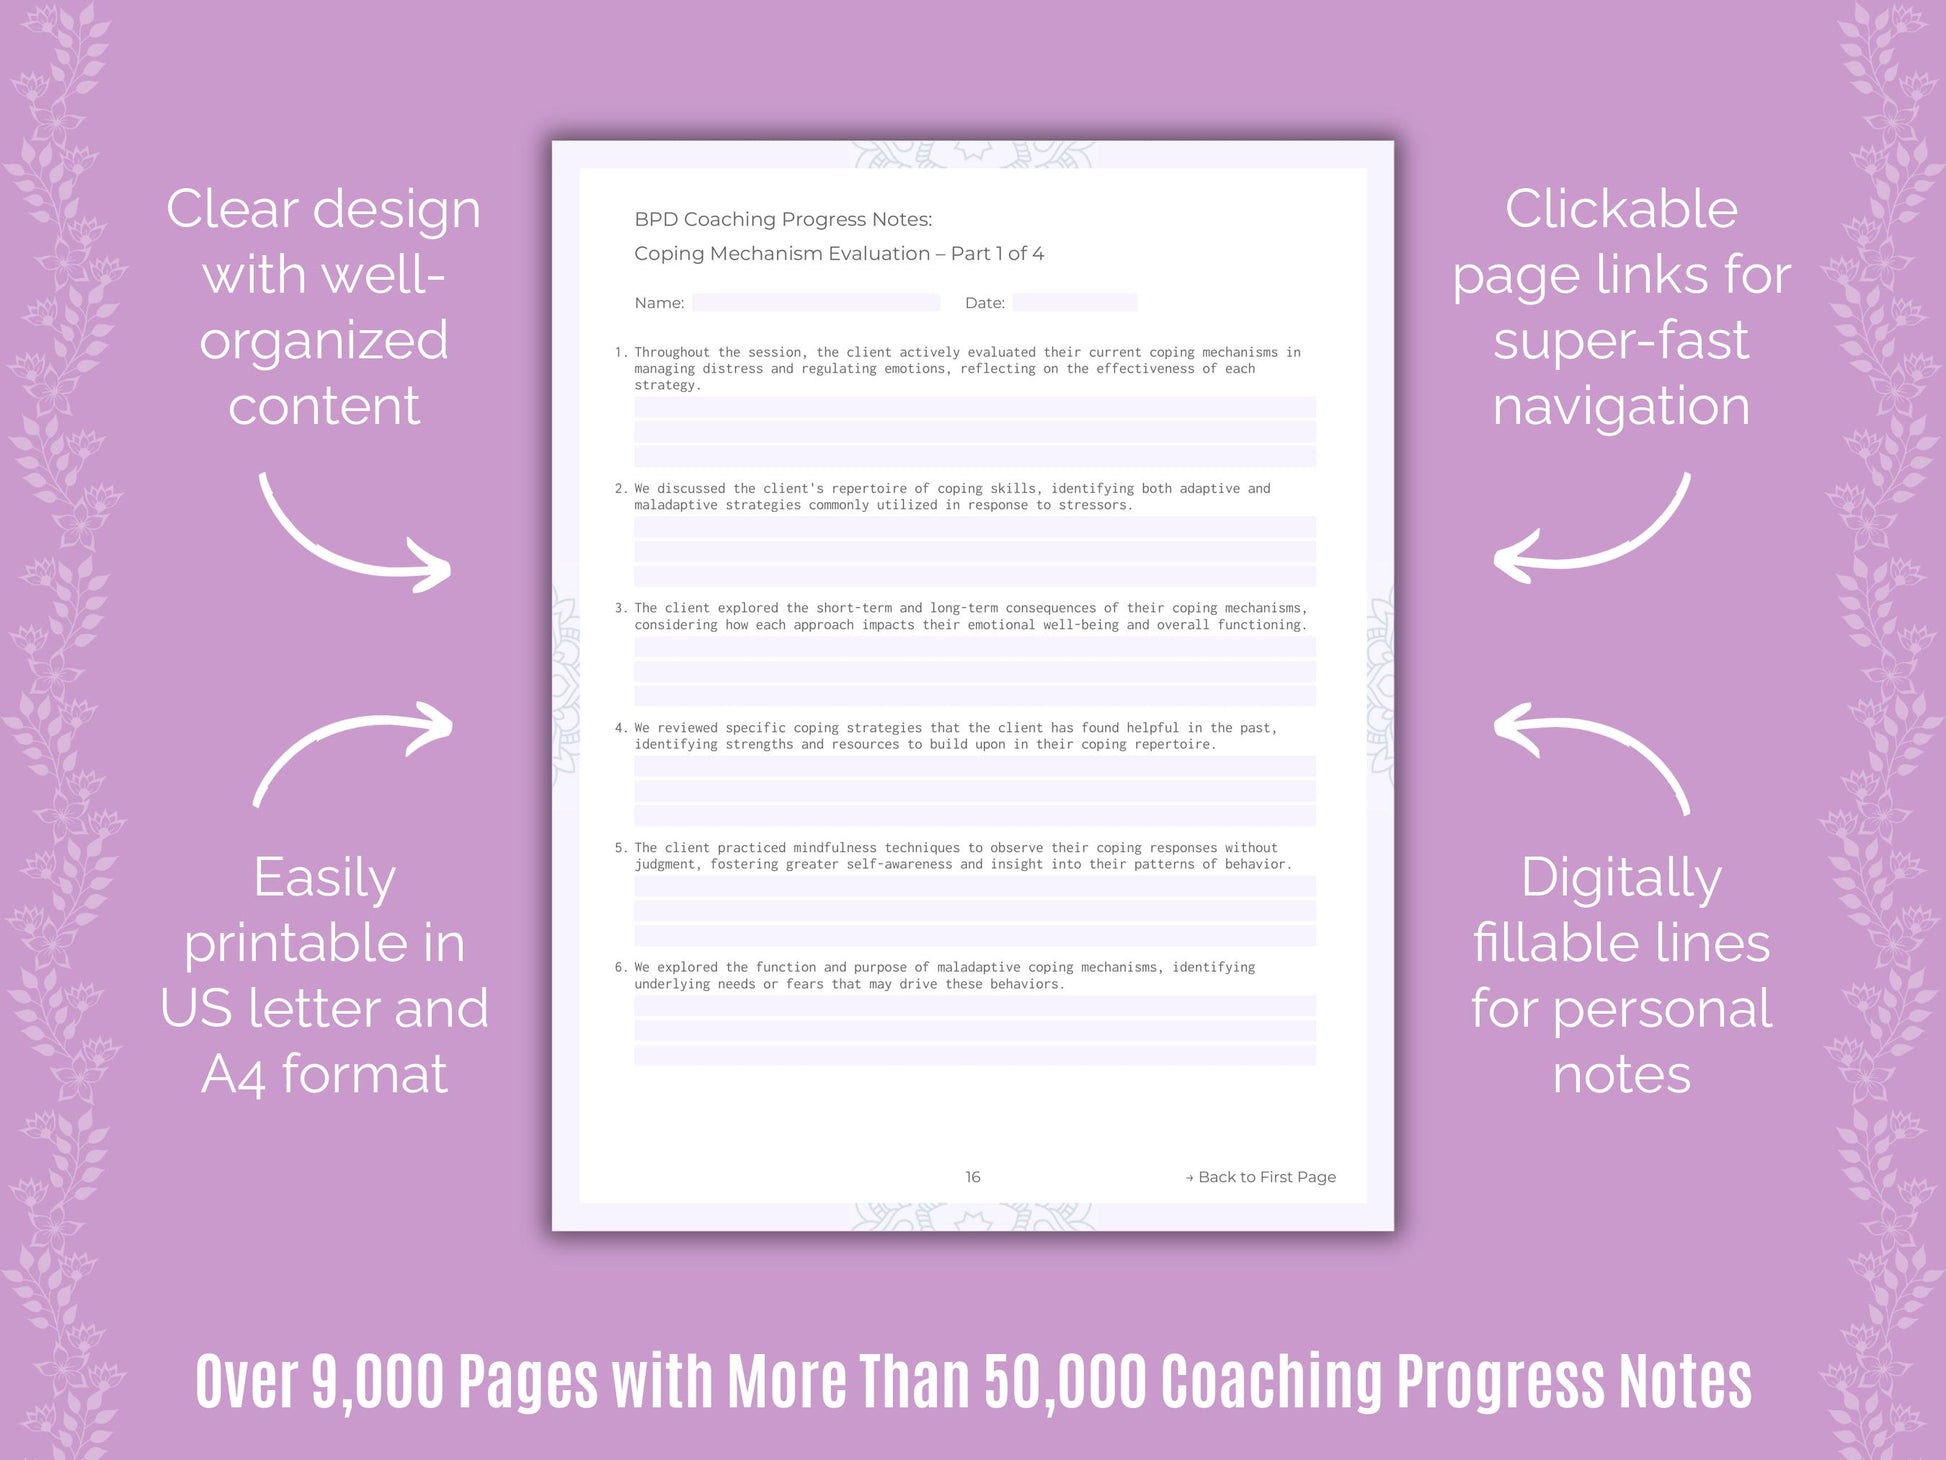 Coaching Progress Notes Content